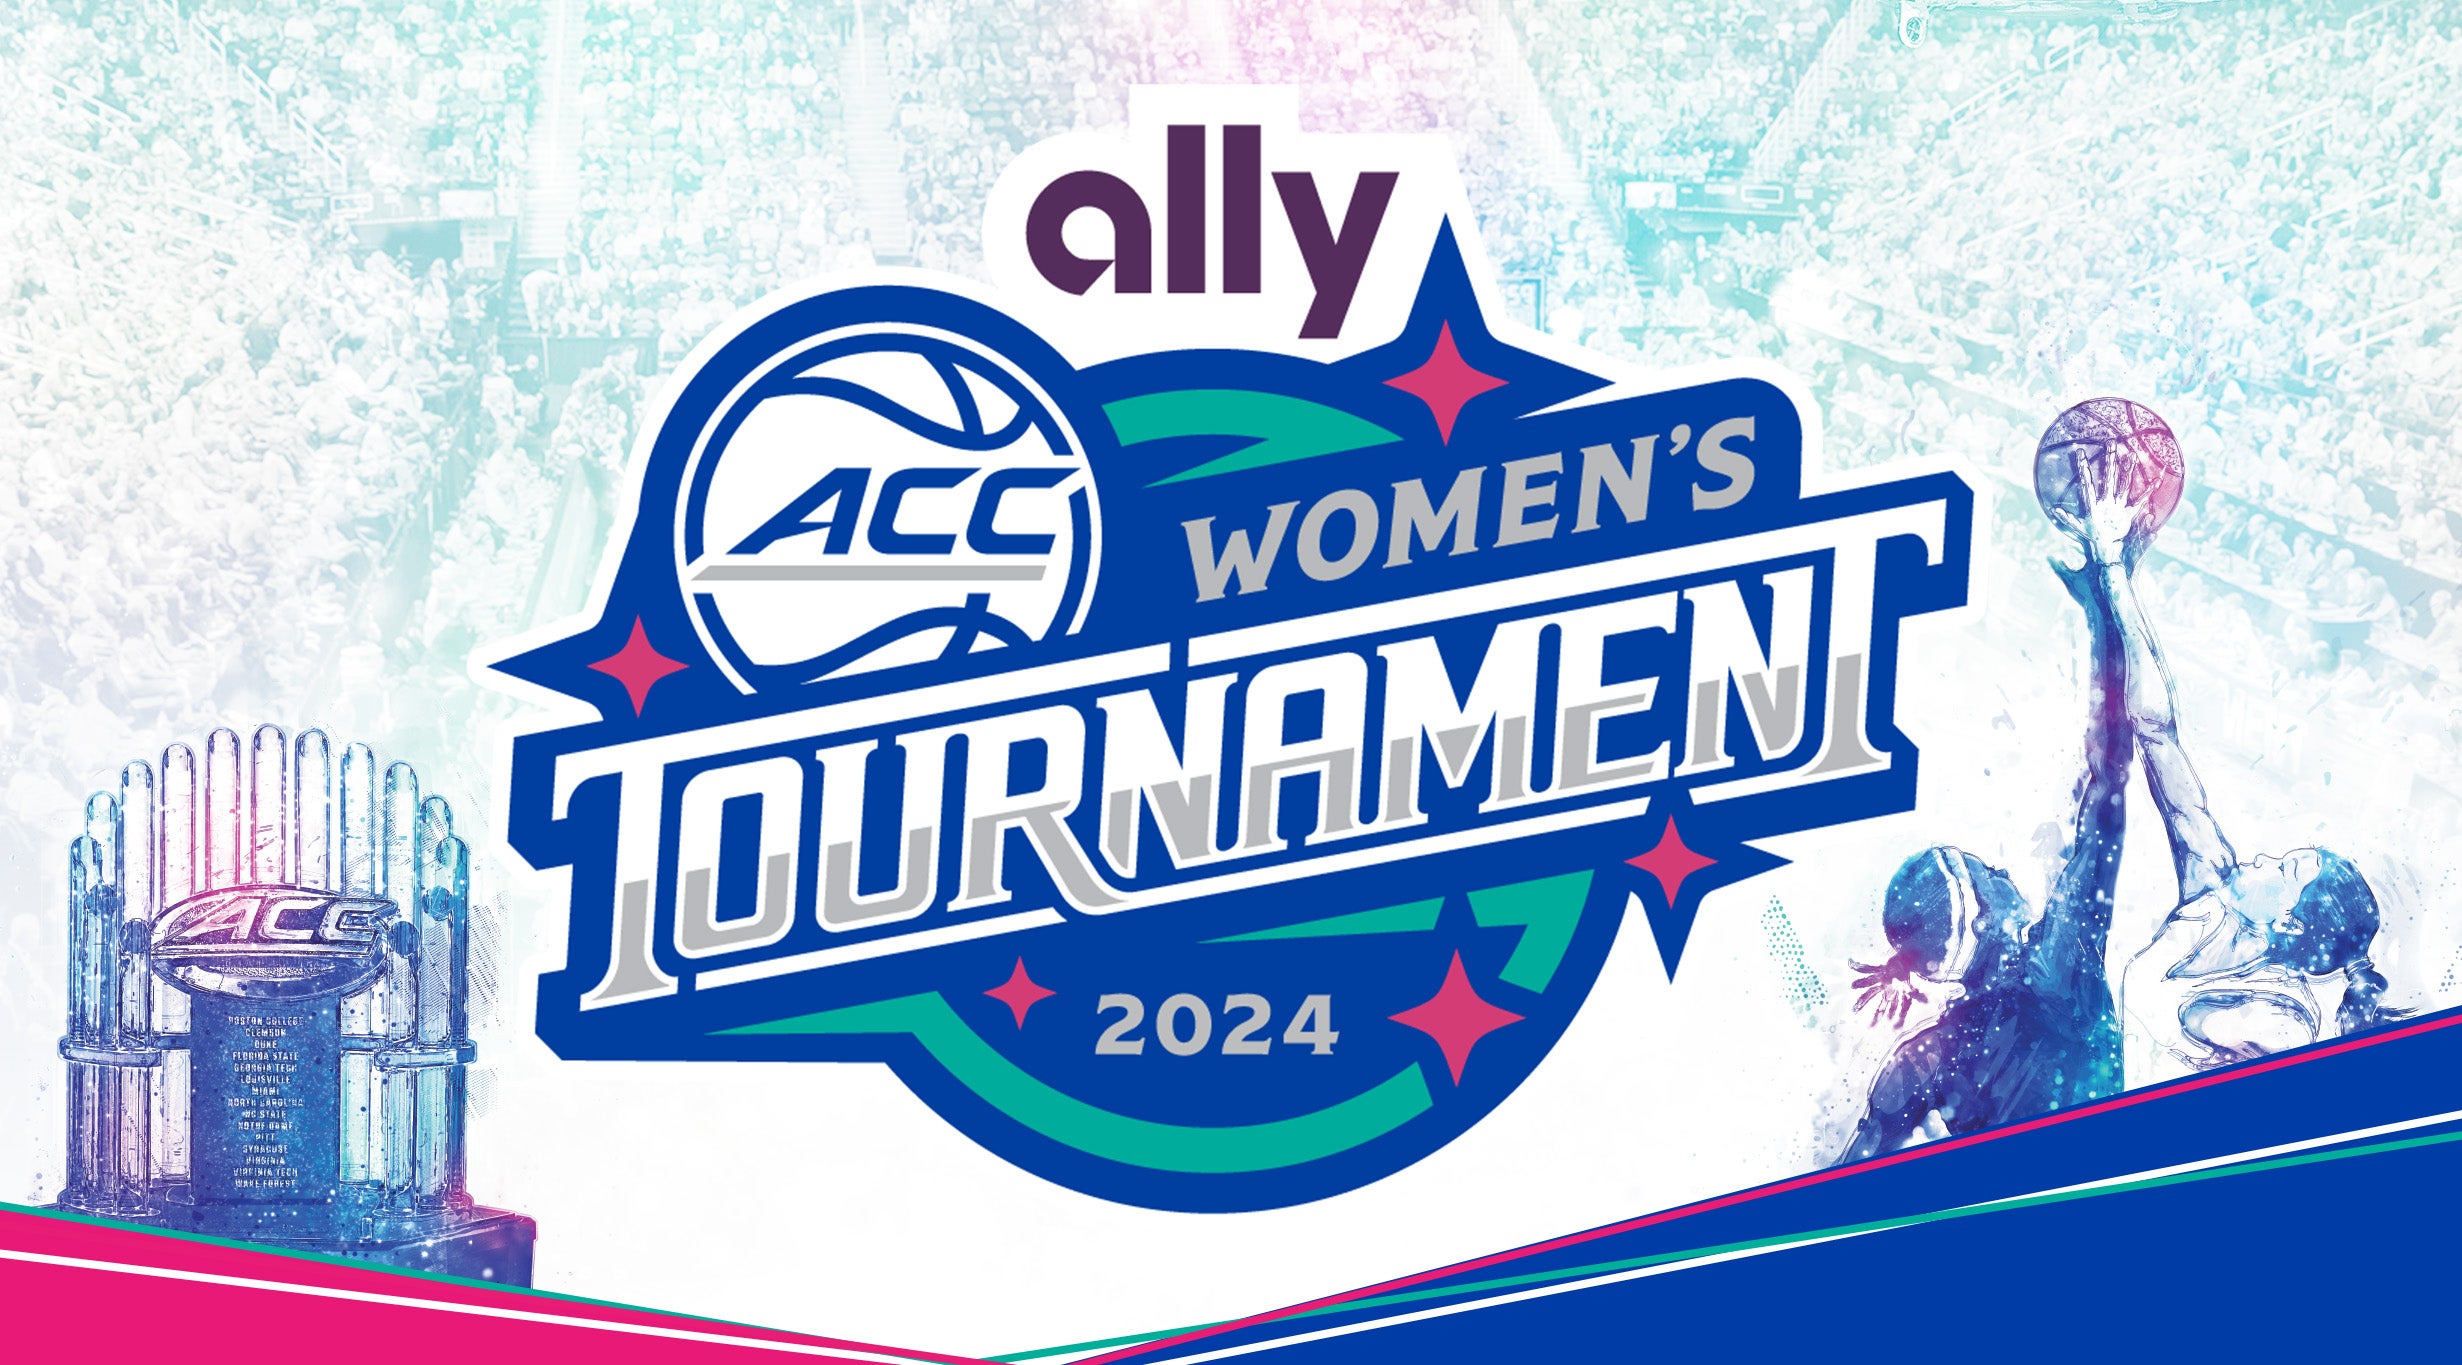 Ally ACC Womens Basketball Tournament Semifinals in Greensboro promo photo for Venue presale offer code